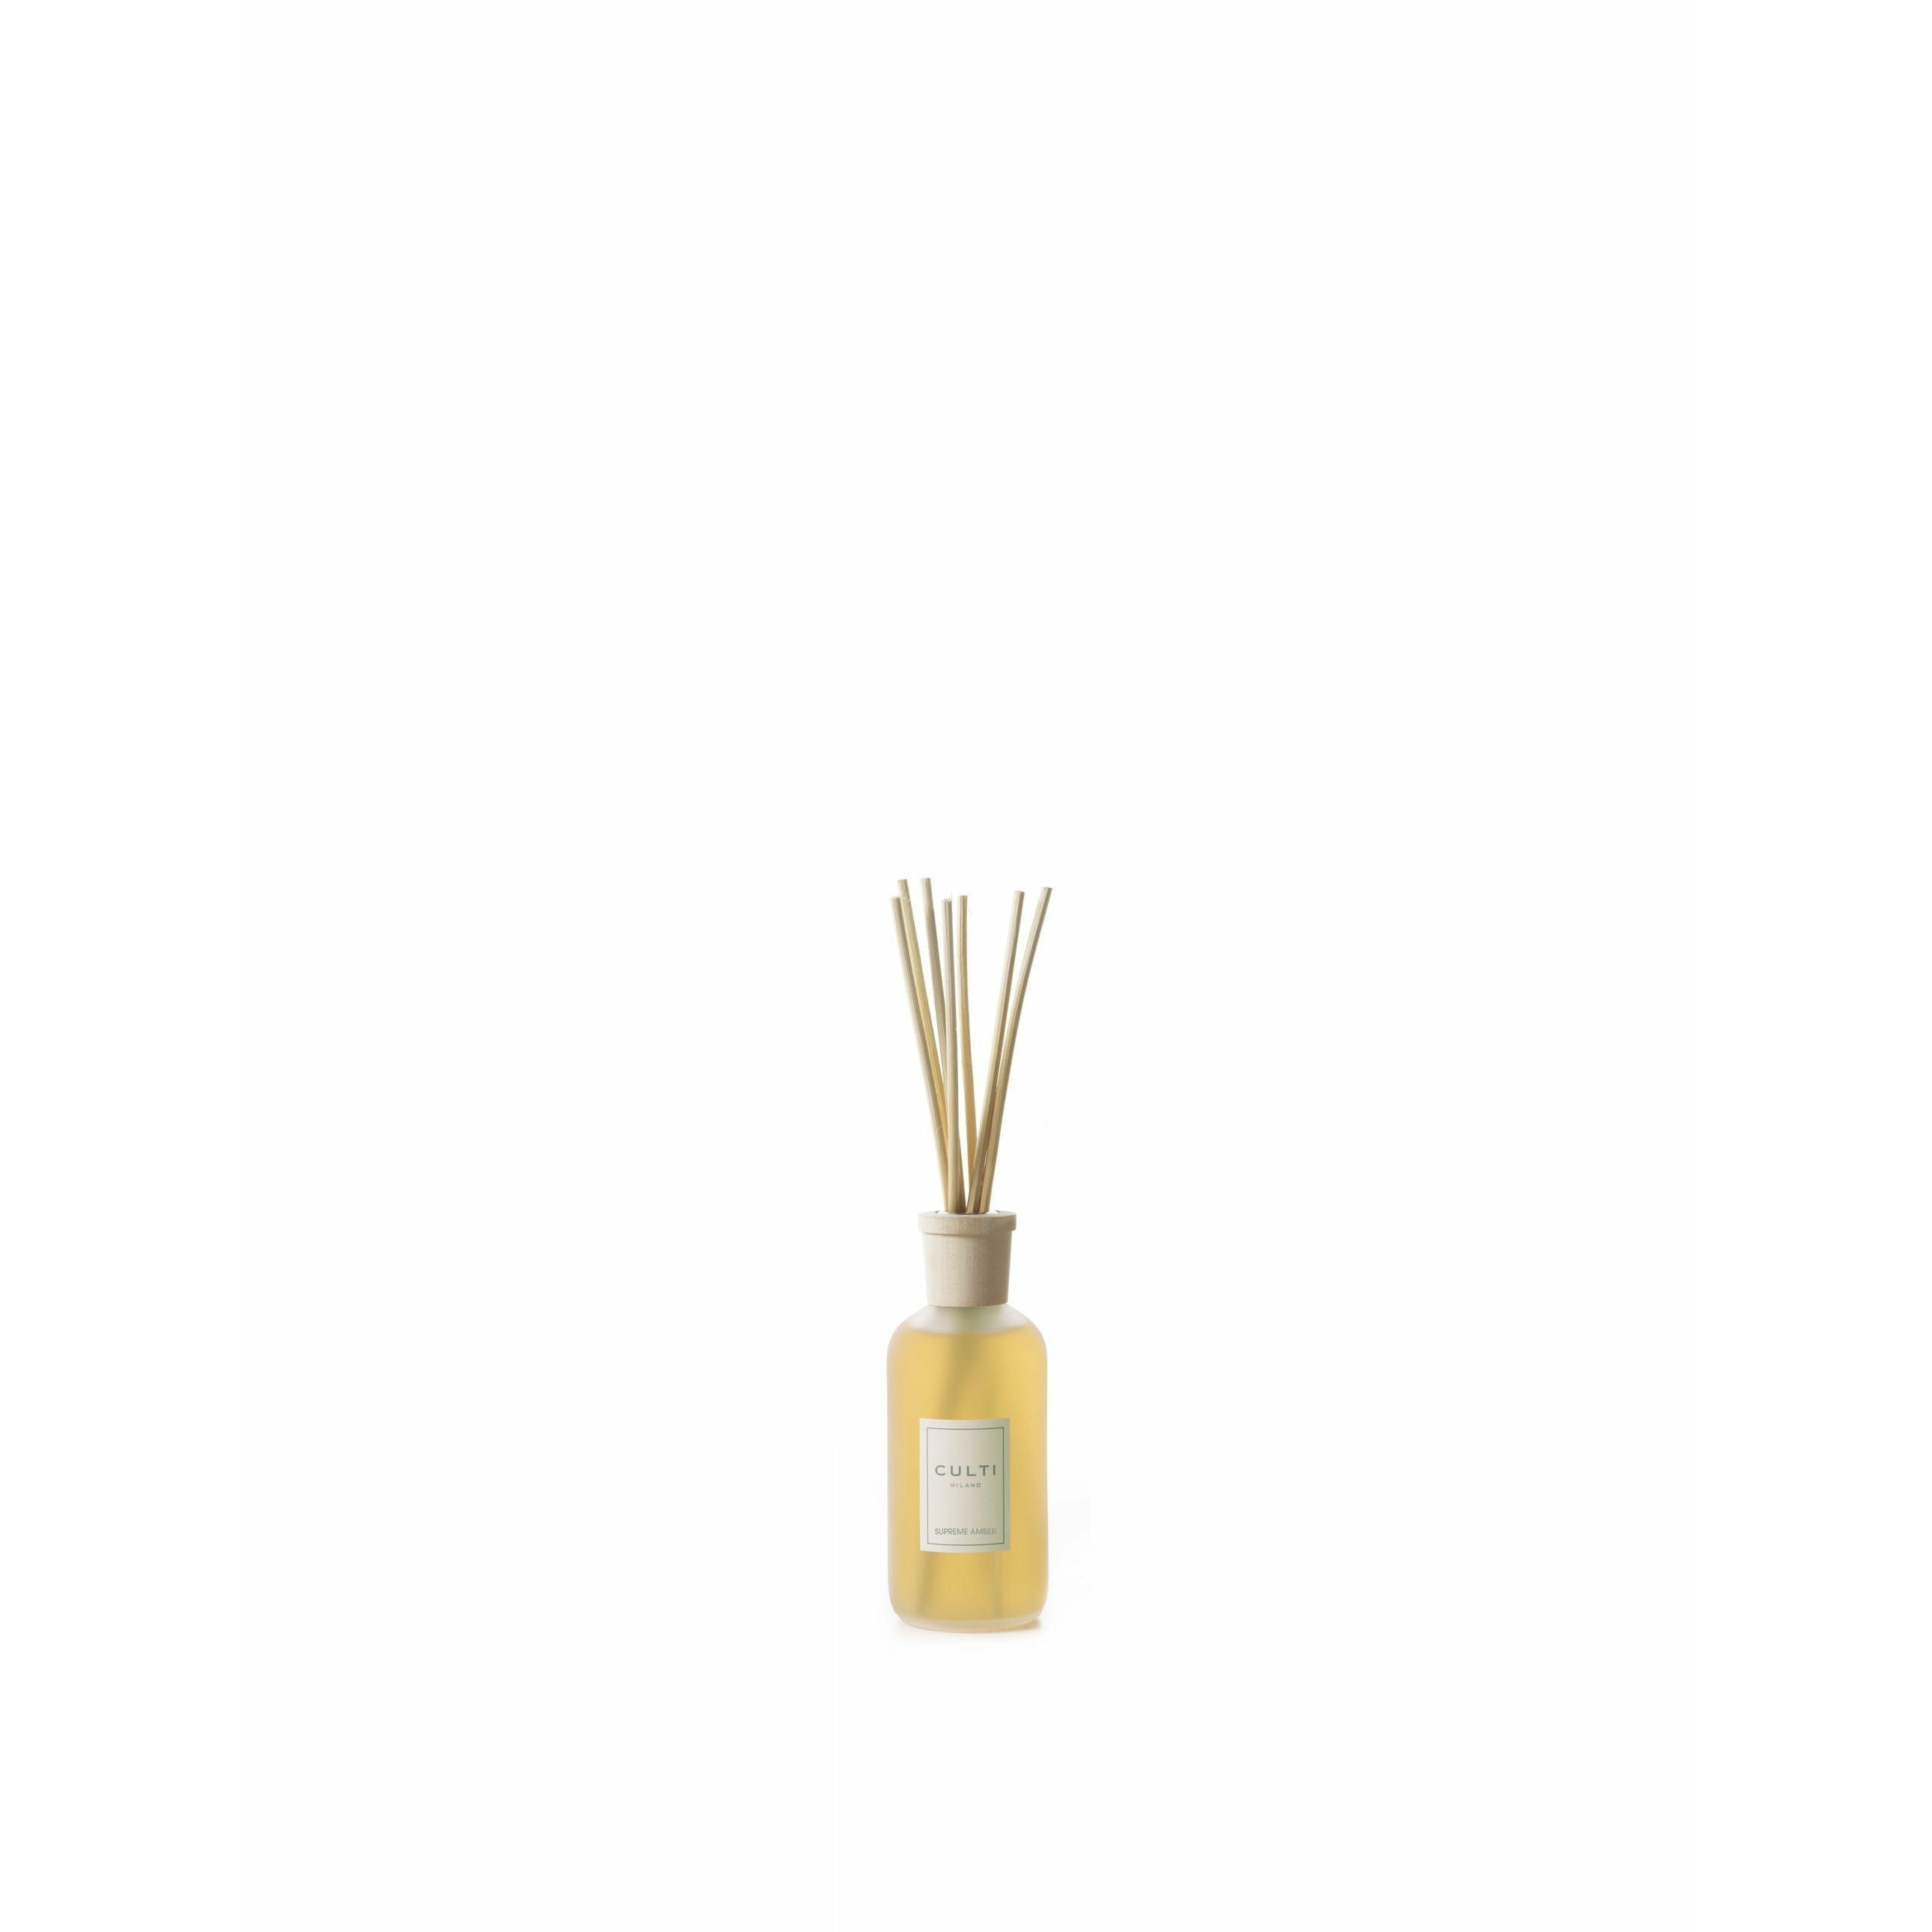 Culti Milano Stile经典香水扩散器最高琥珀色，250毫升